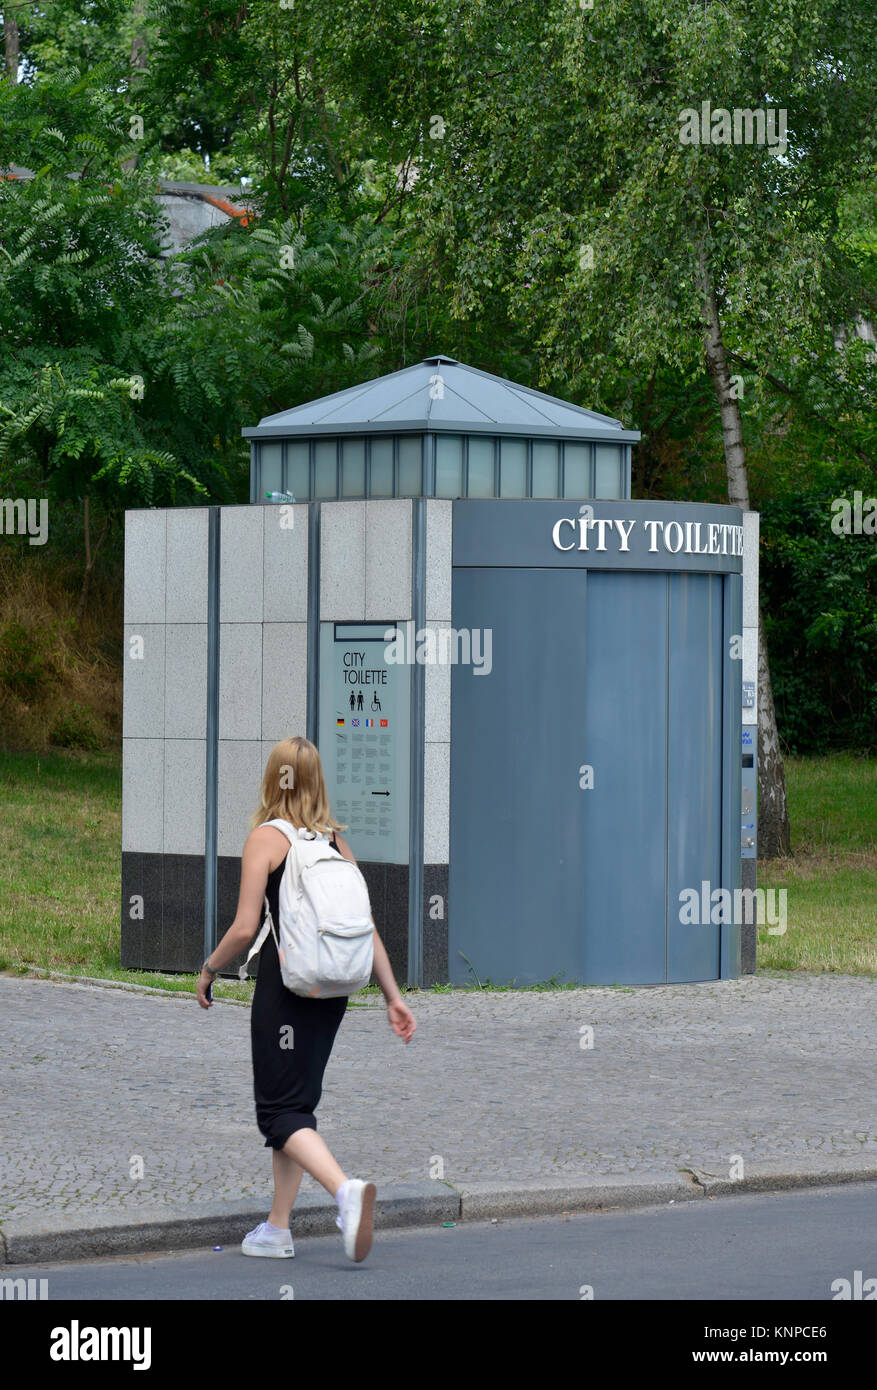 City toilet, city hall, Hanna-Renate-Laurien-Platz, Leonorenstrasse, Lankwitz, Steglitz-Zehlendorf, Berlin, Germany, City-Toilette, Rathaus, Deutschla Stock Photo